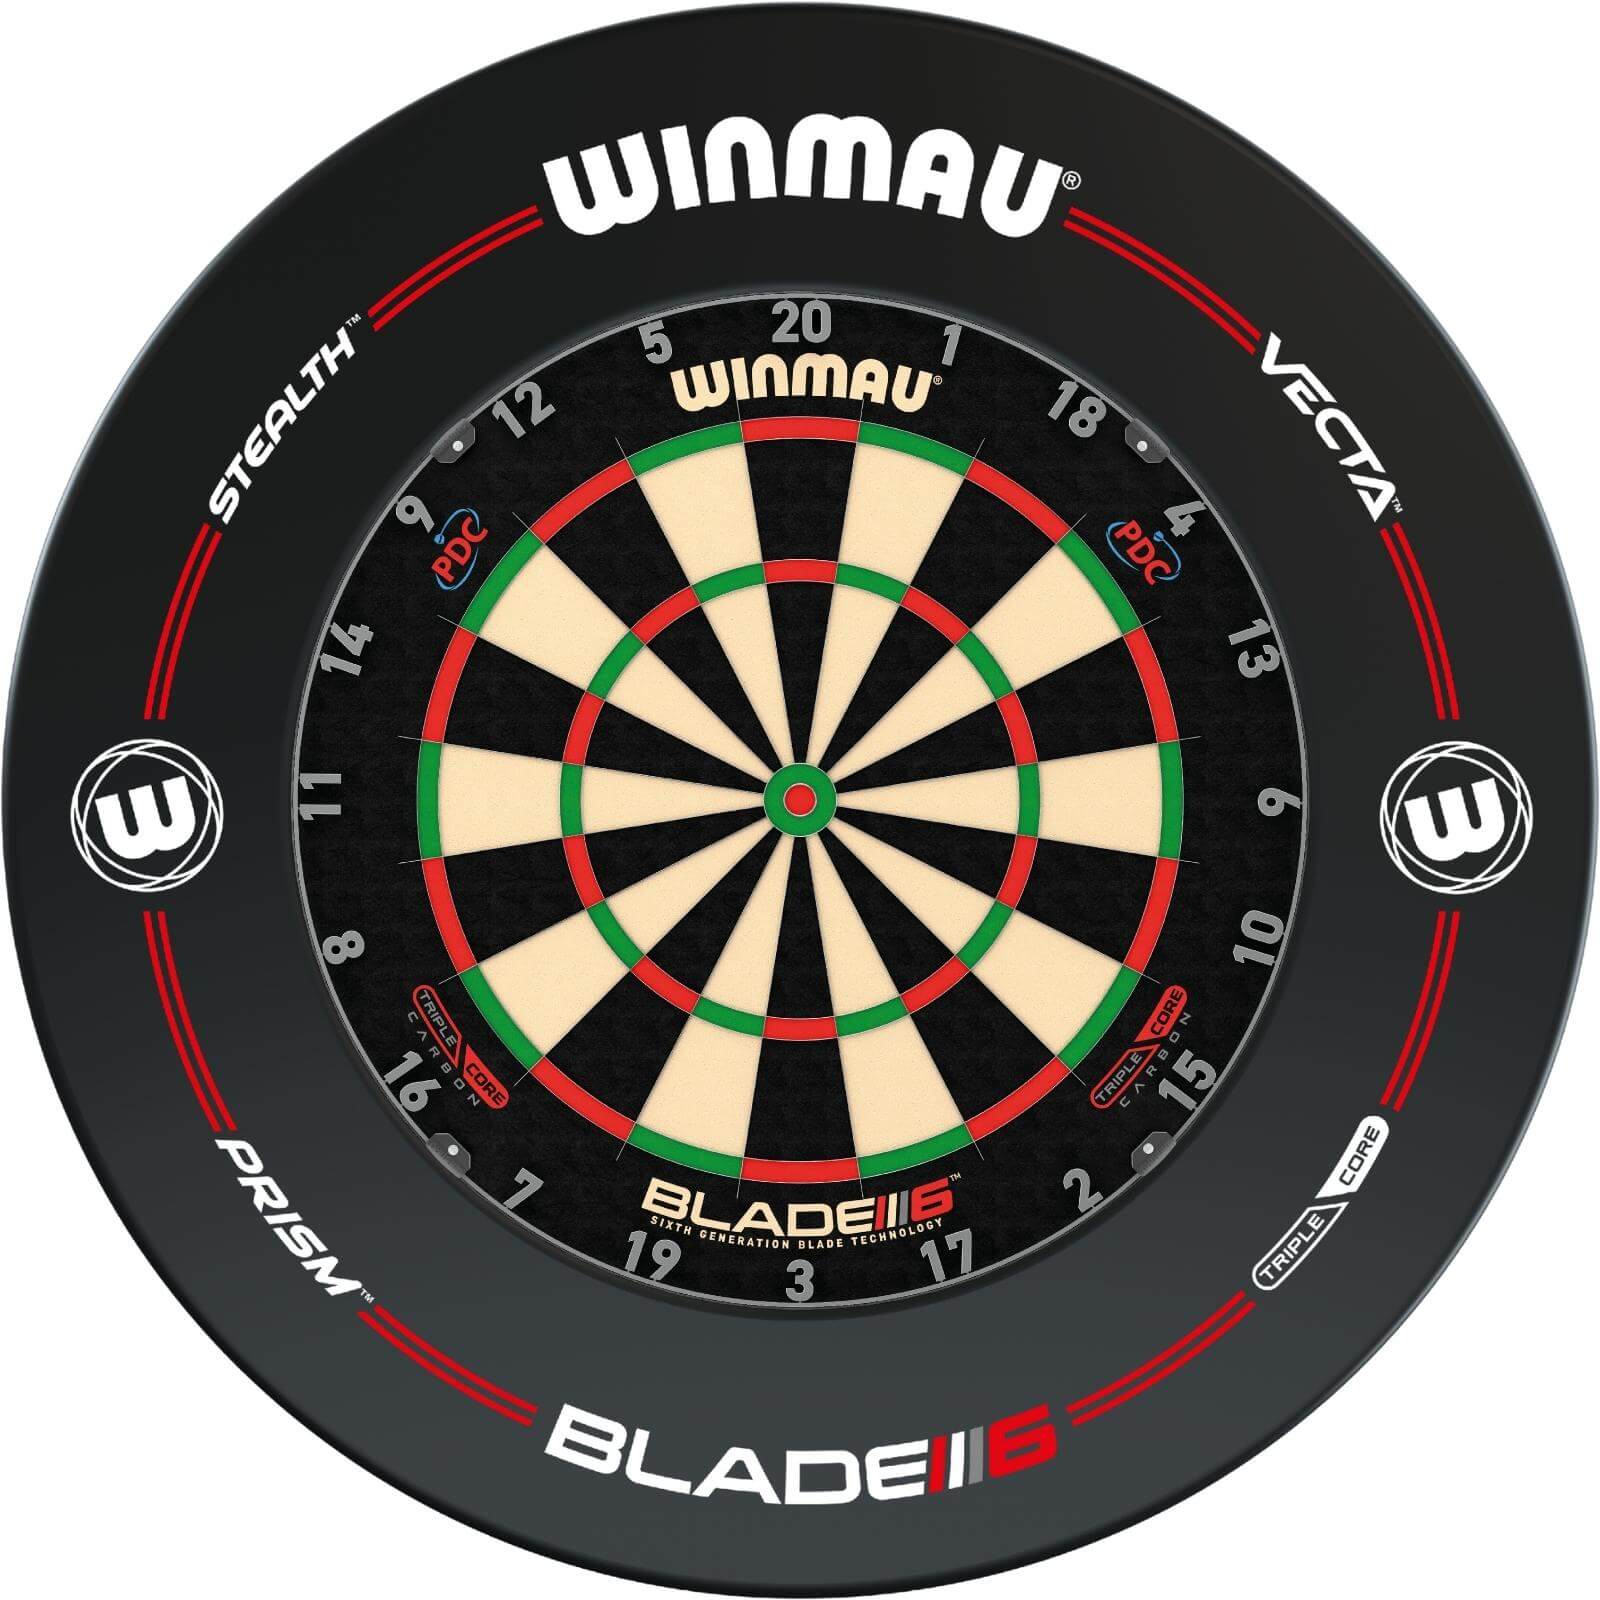 Winmau Blade 6 Triple Core Dartboard & Surround Package For Sale - Avid  Darts